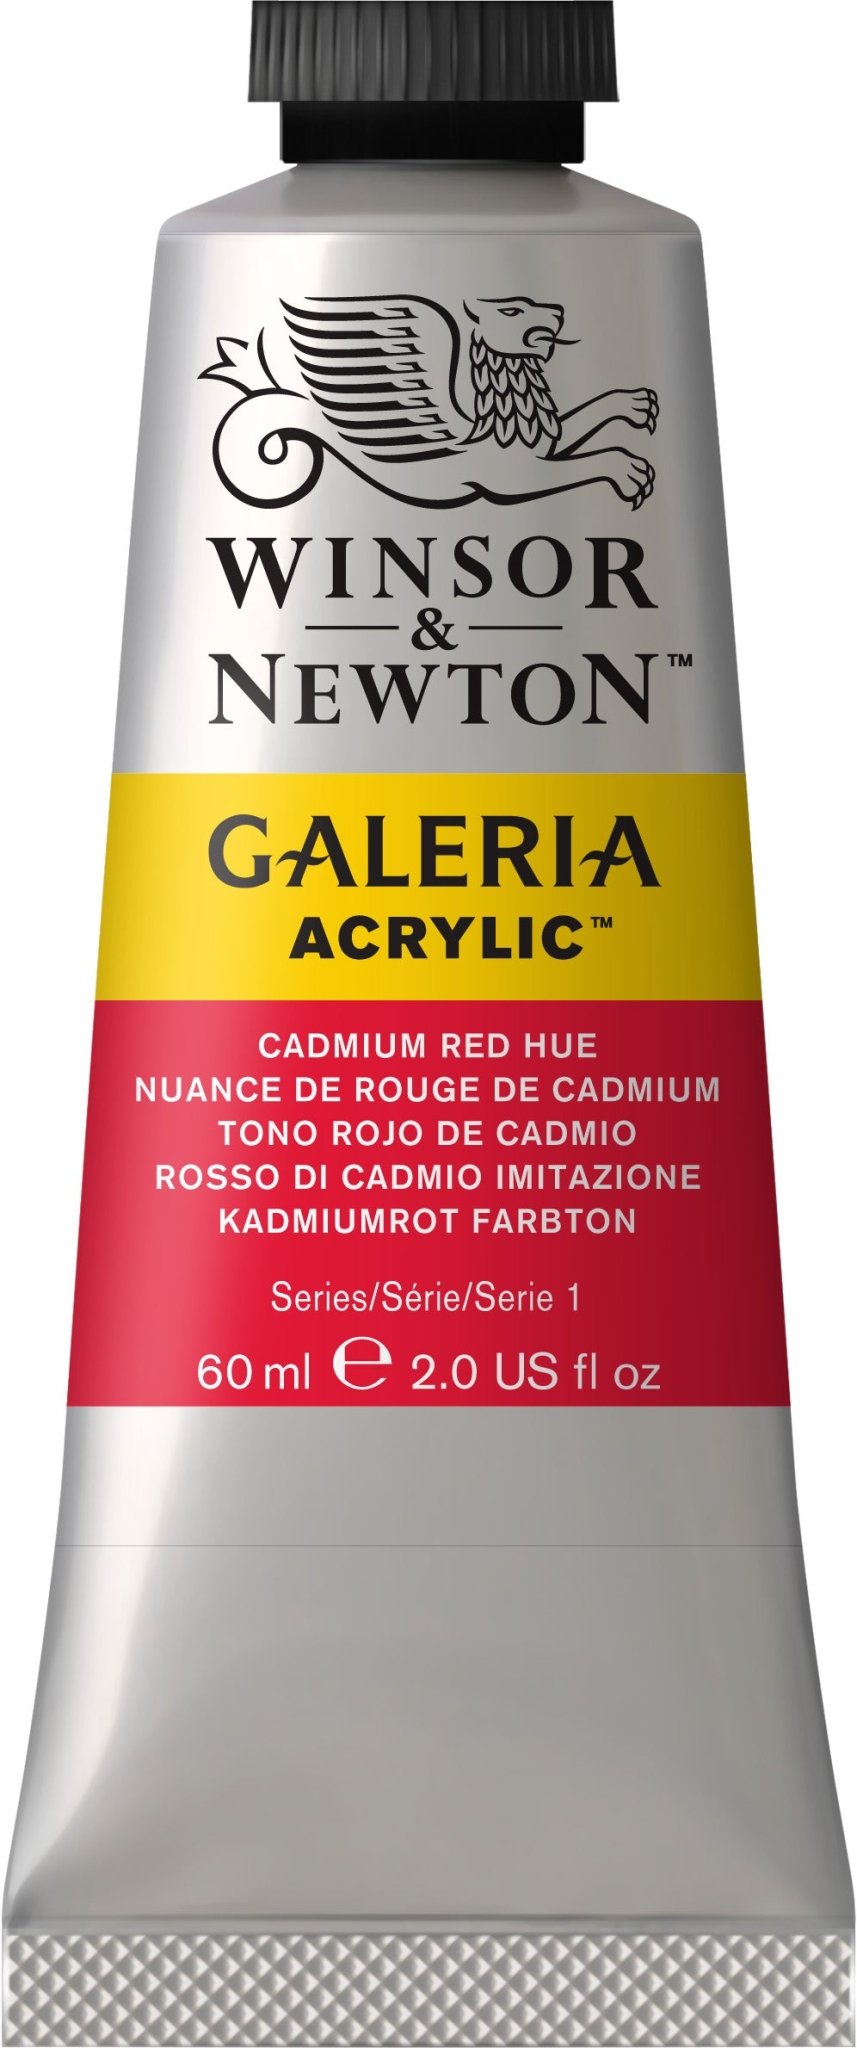 W & N Galeria Acrylic 60ml Cadmium Red Hue - theartshop.com.au